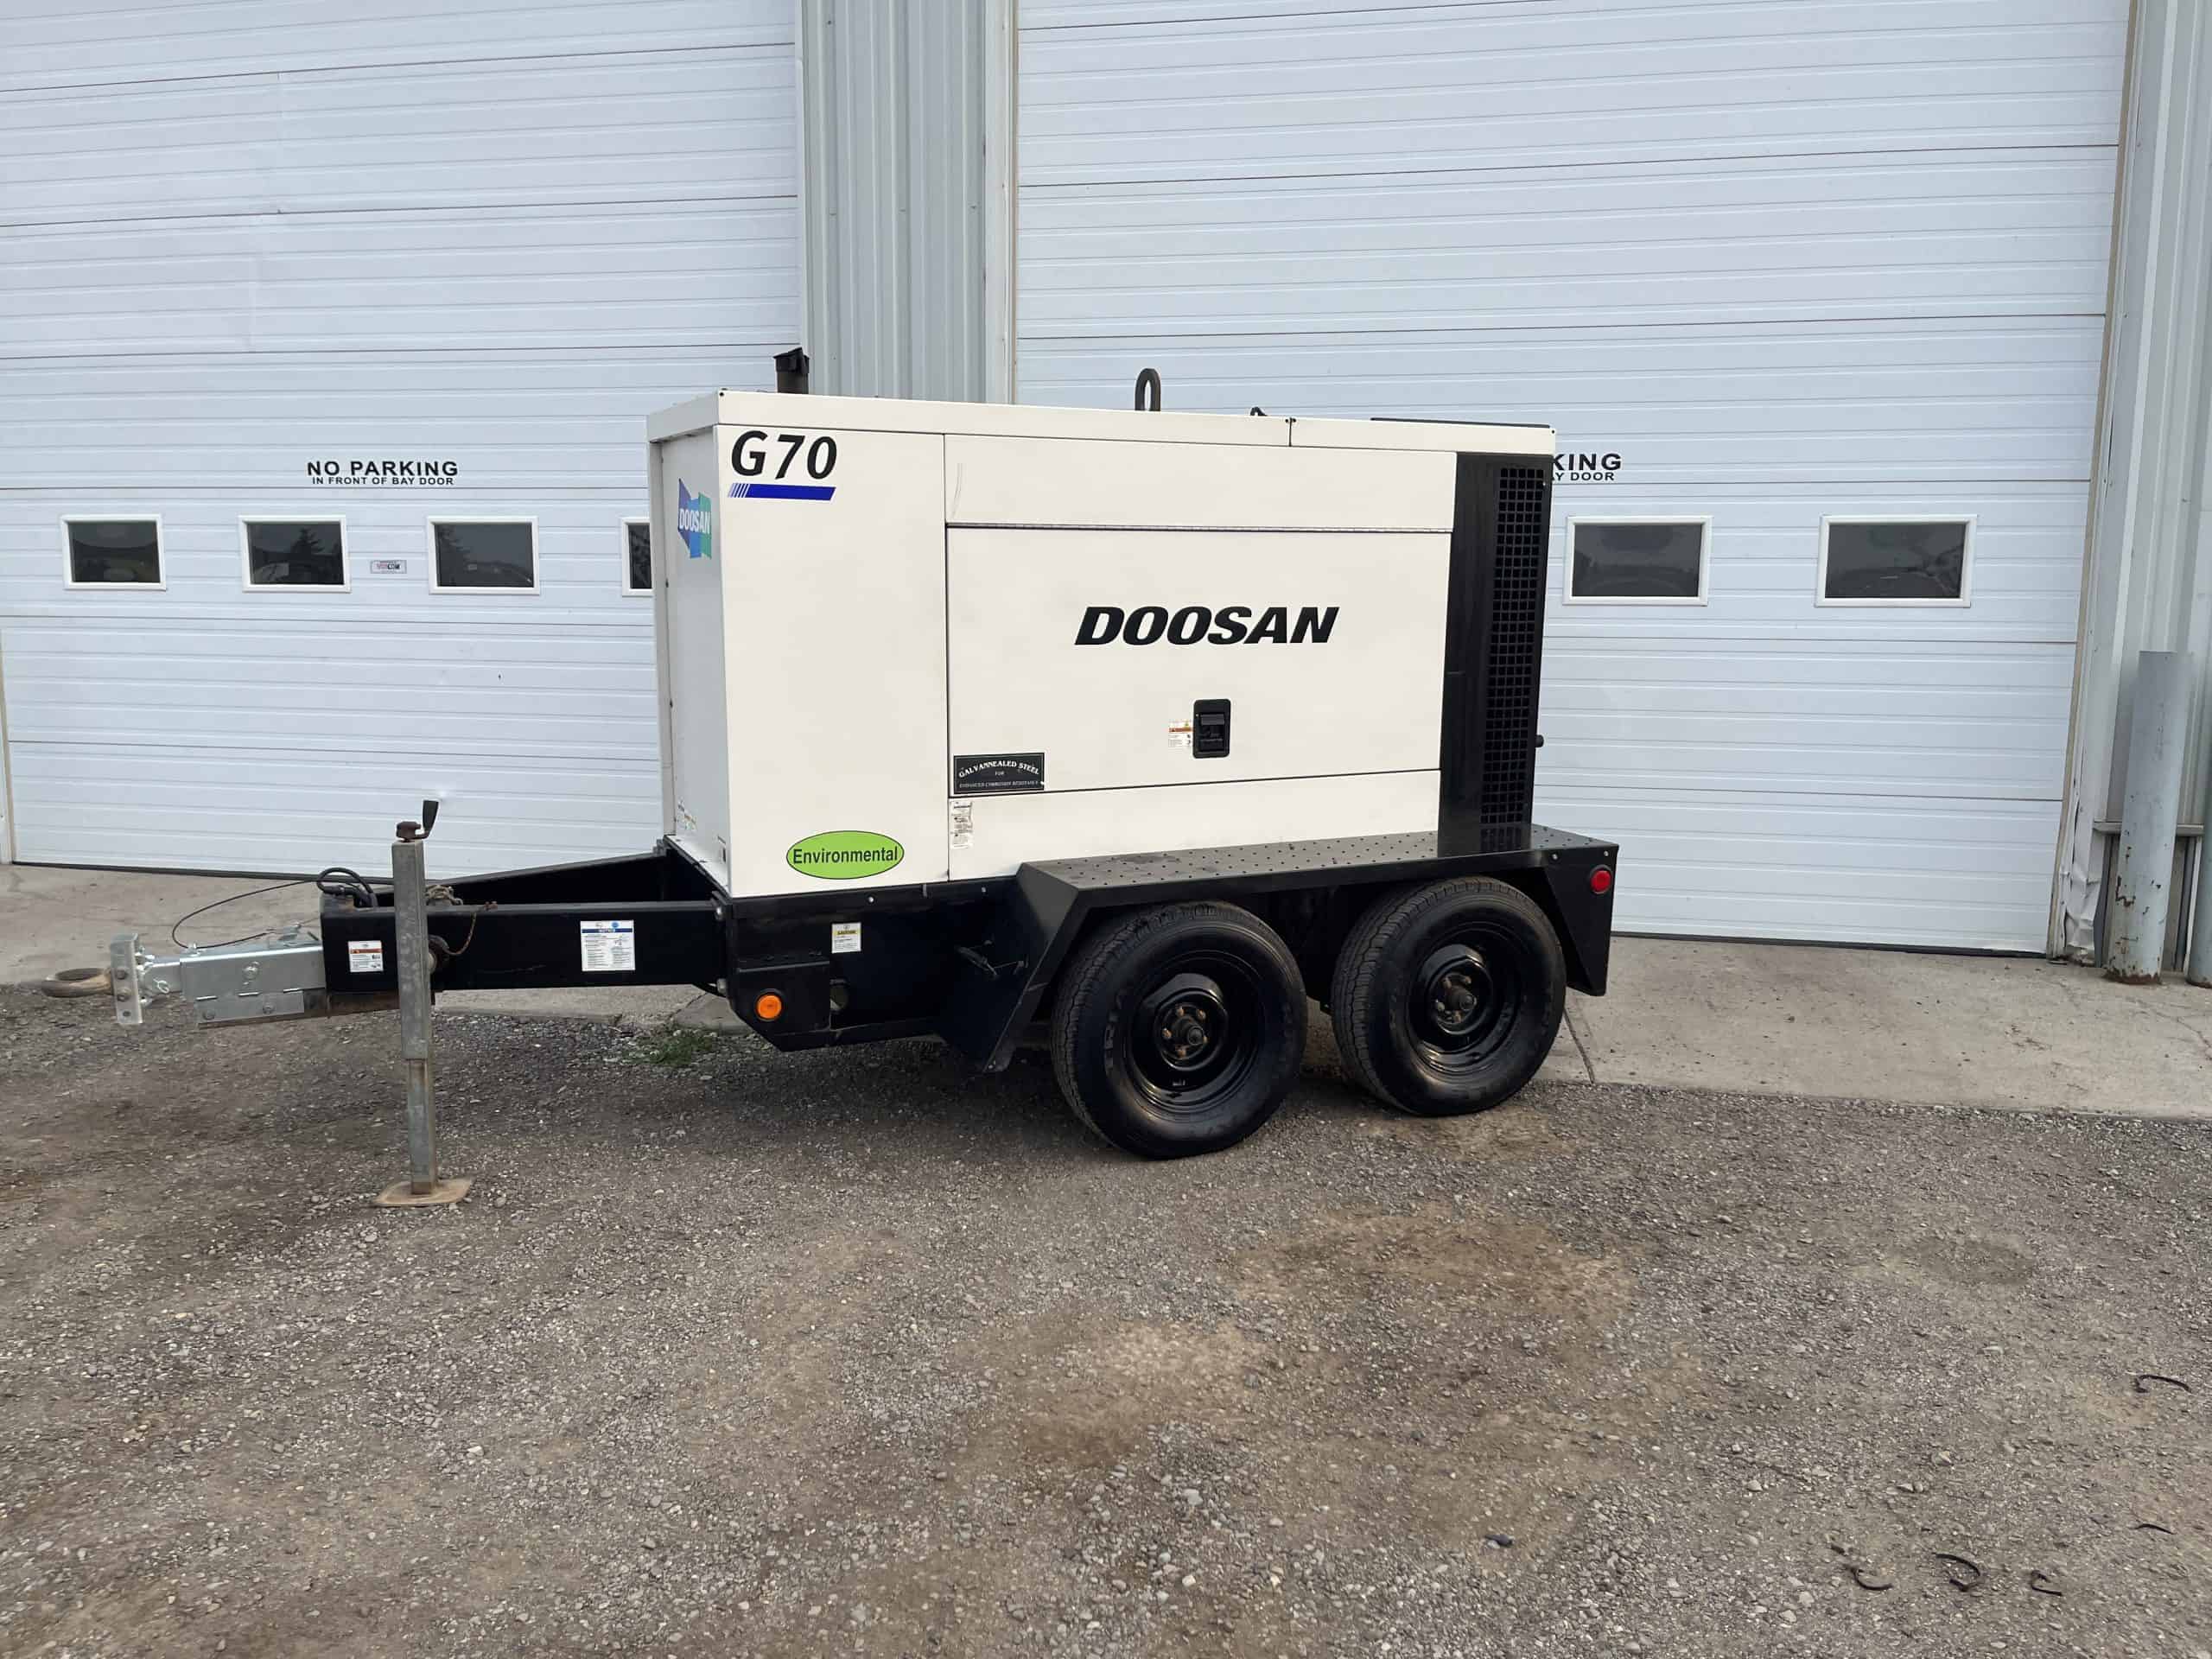 Doosan G70 generator for sale 70 kva 56 / 58 kw in Calgary Alberta Canada